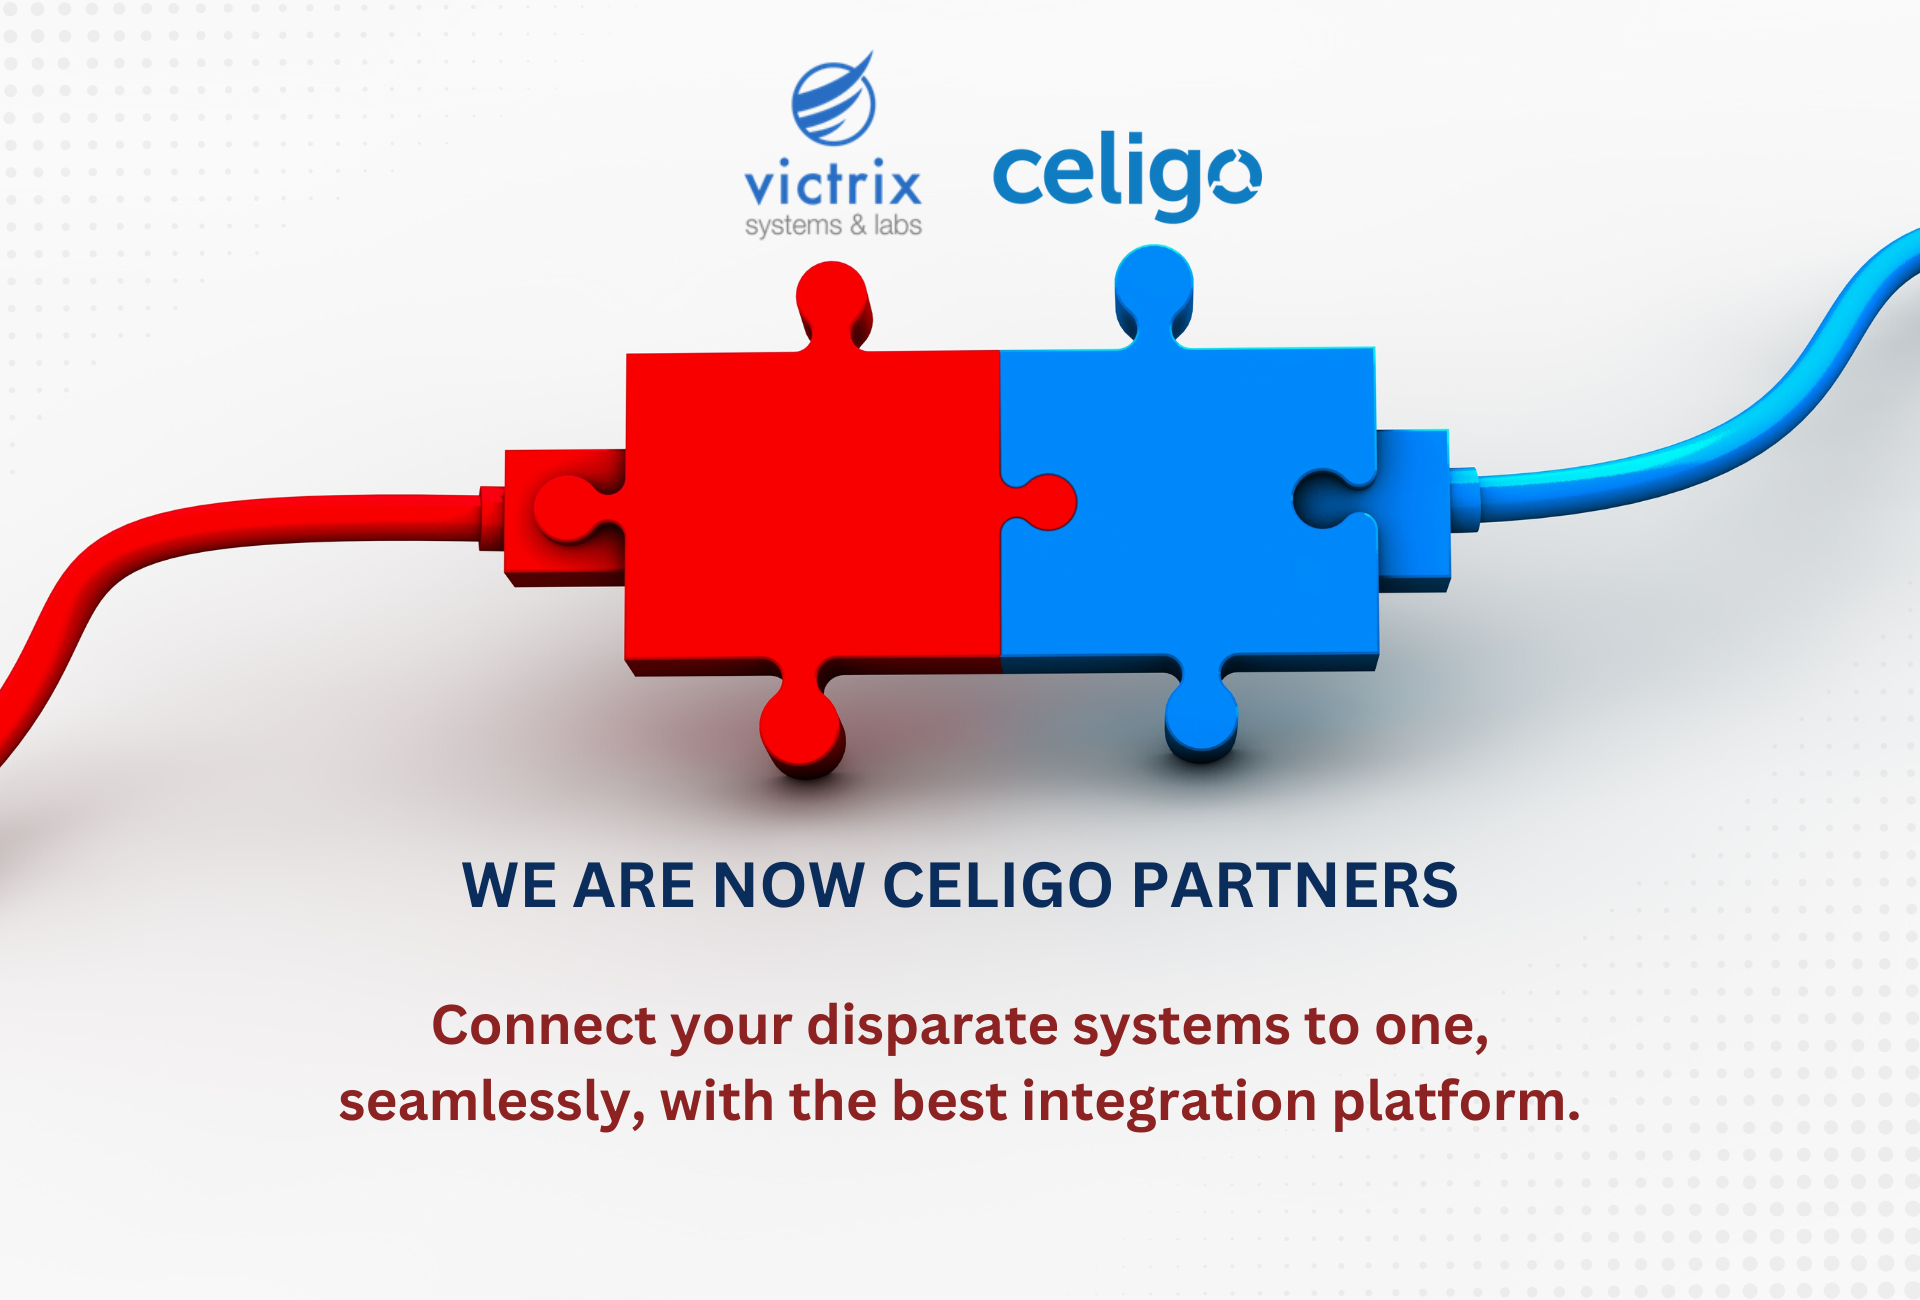 Victrix and celigo partnership, integration platform